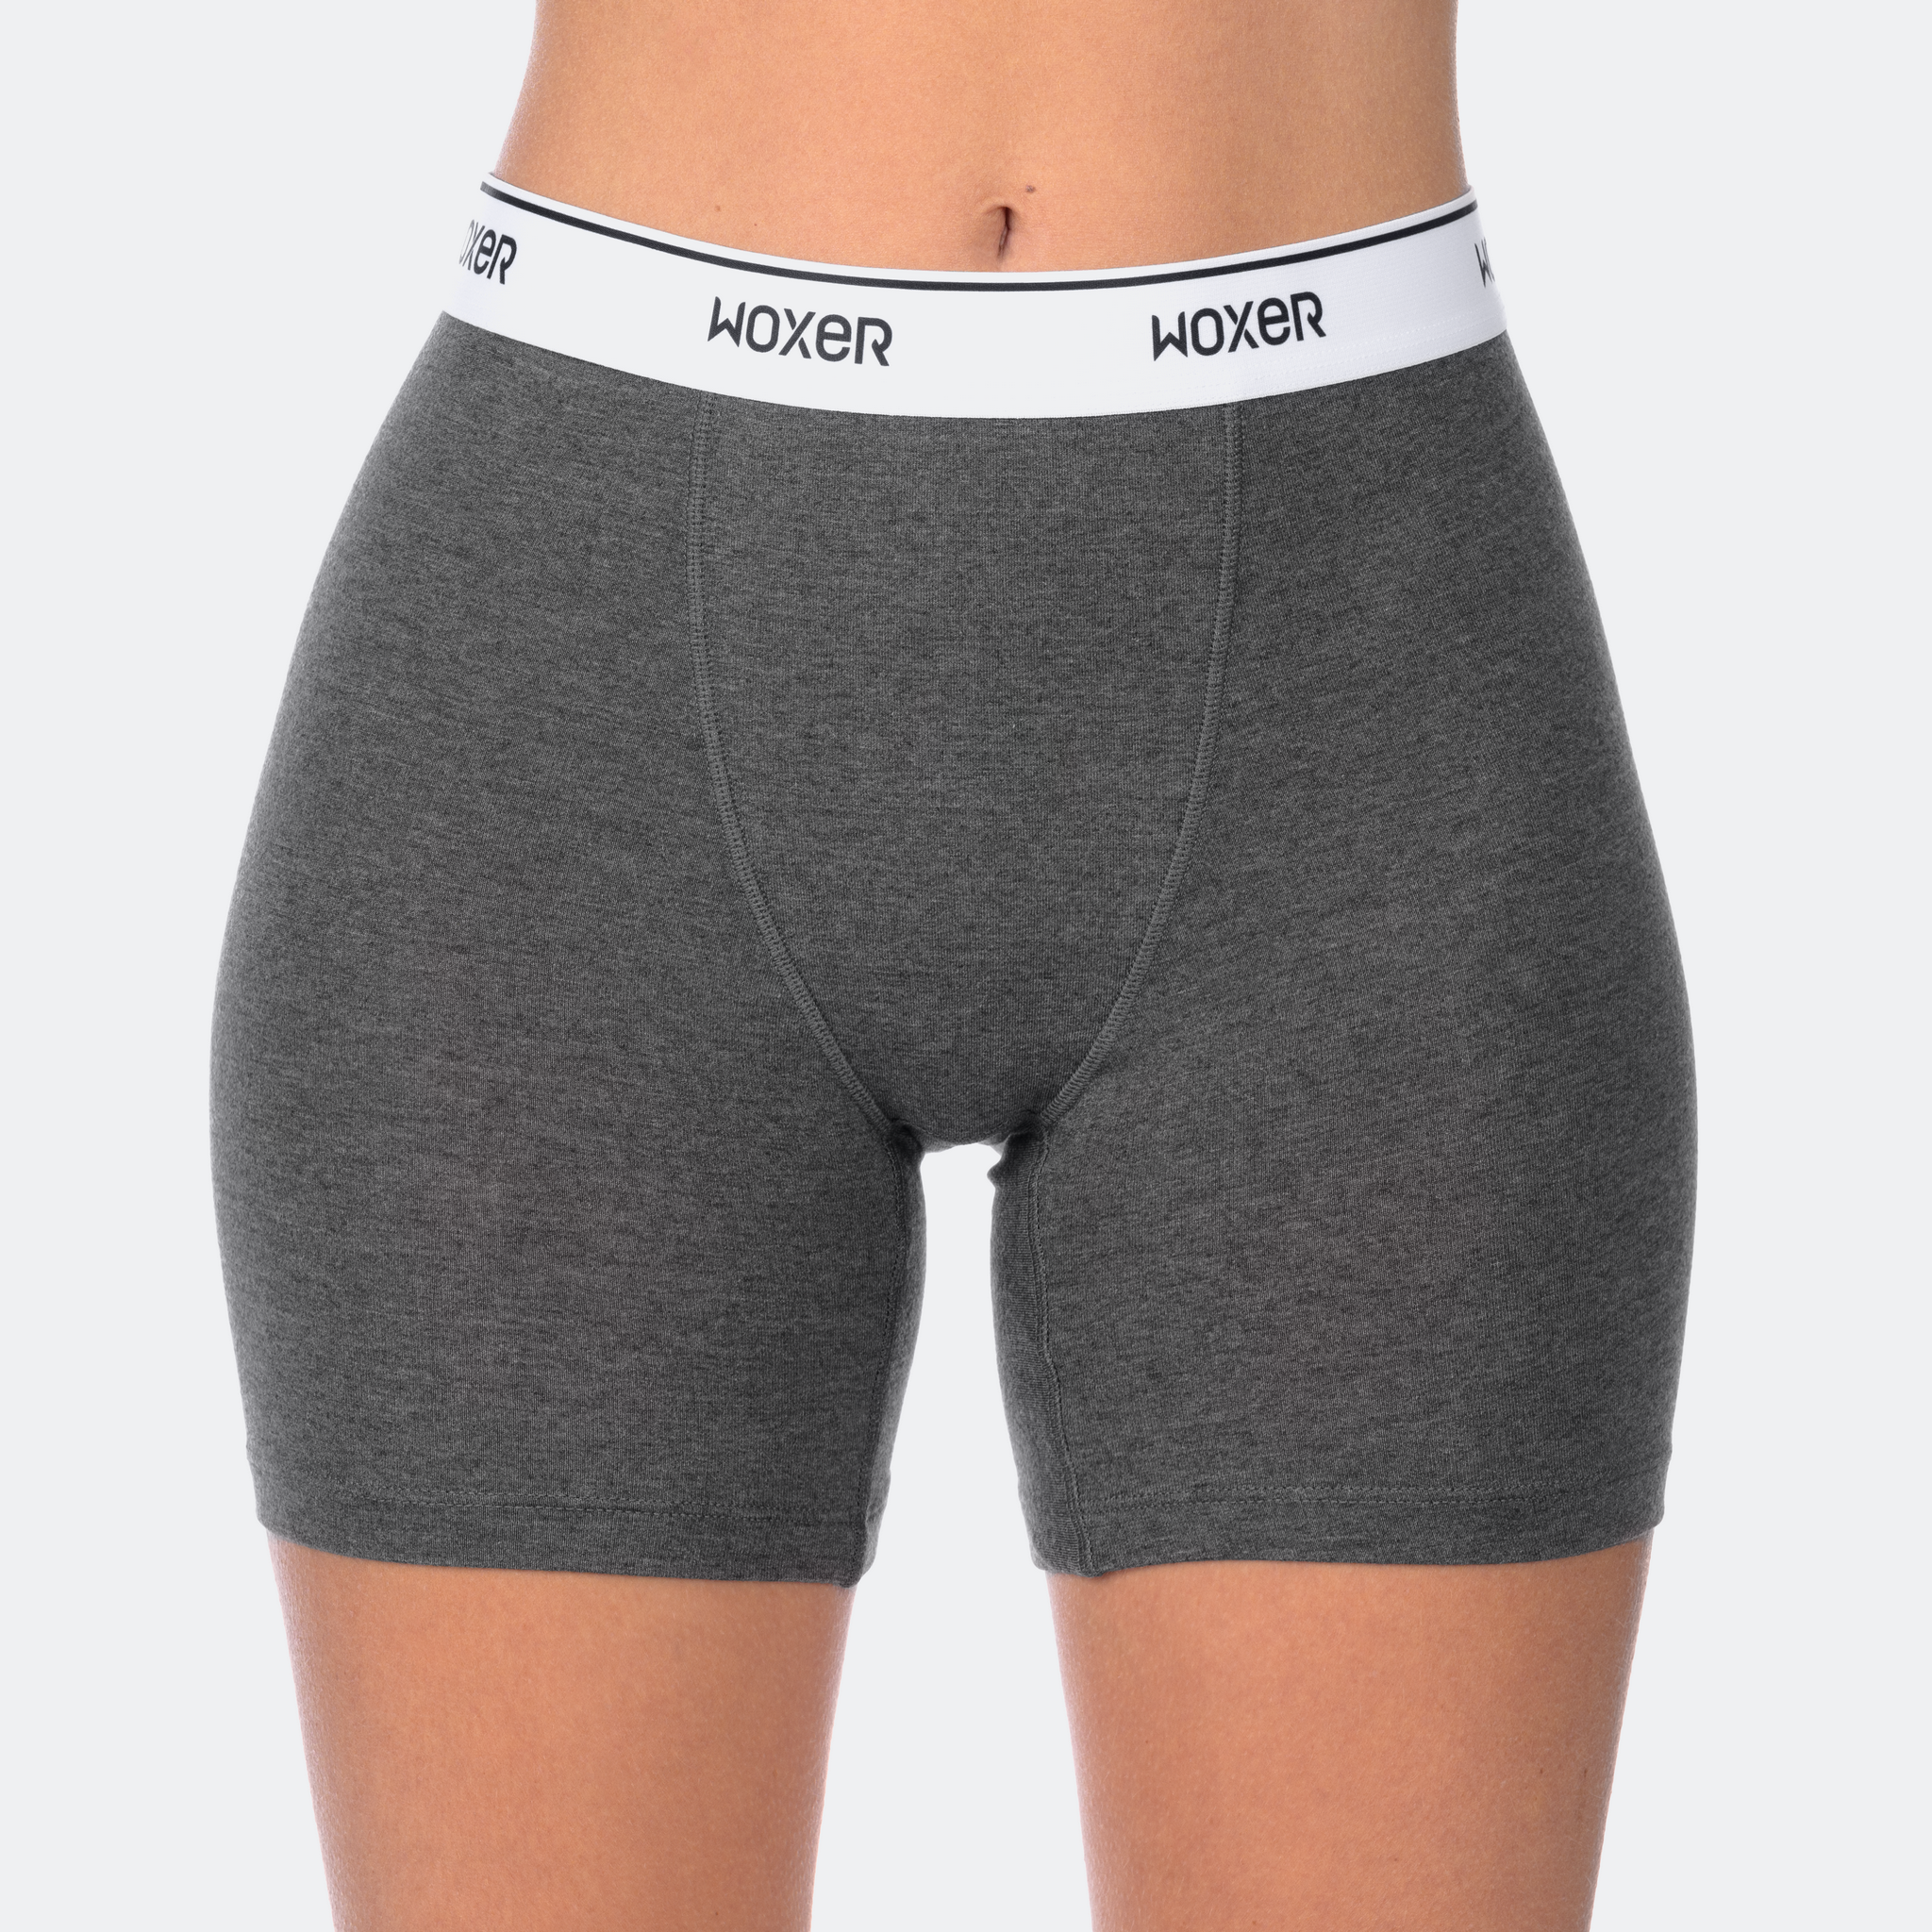 Woxer Boxer Briefs for Women Baller High-Waisted 5” Inseam- Underwear for  Ladies, Black, Large